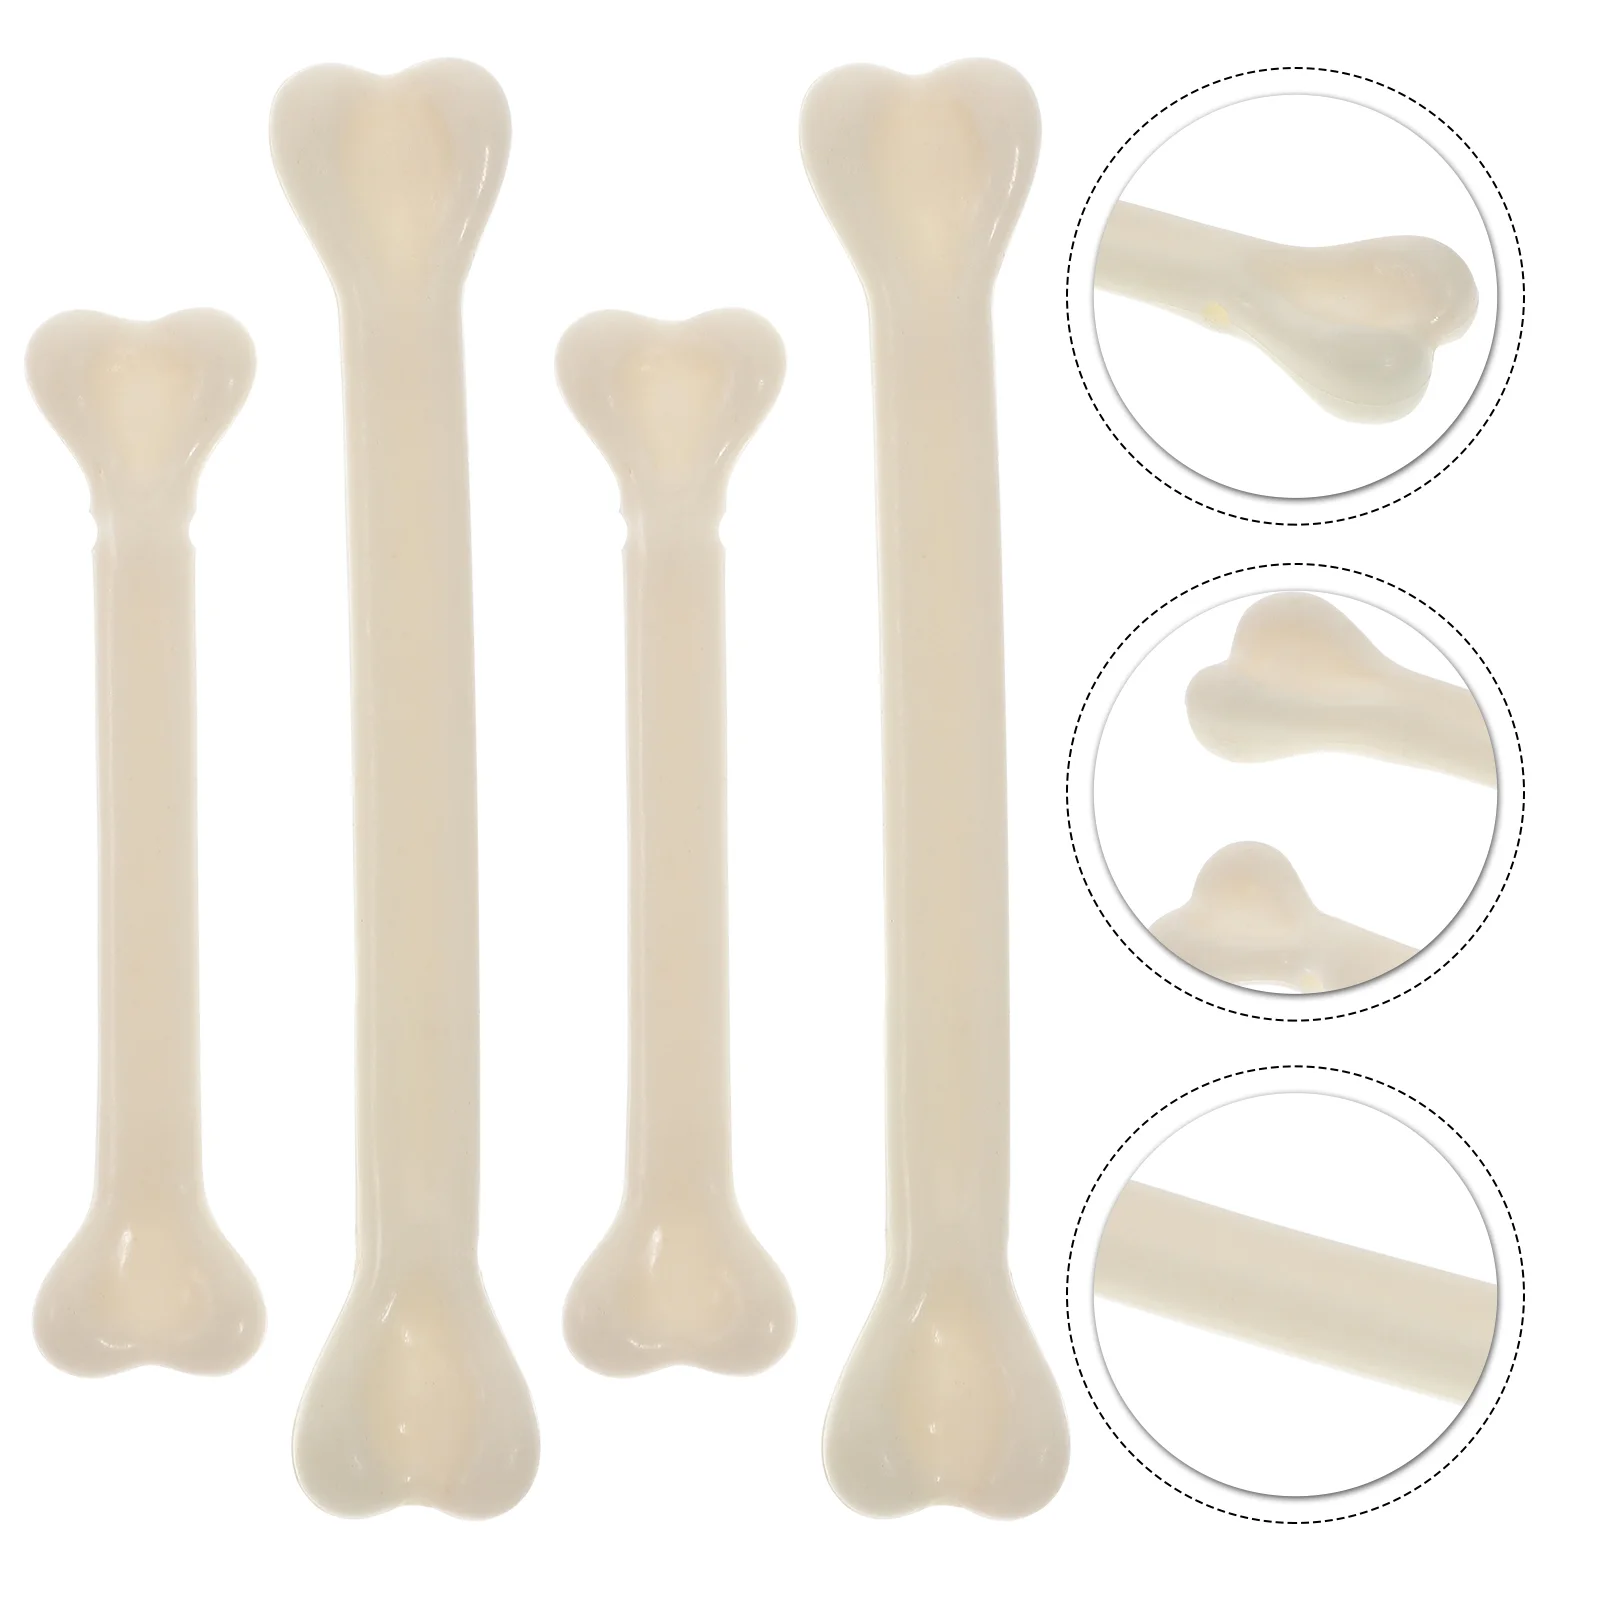 

48 Pcs Halloween Bones Decor Plastic Fake Artificial White Spooky Props Party Decoration Supplies Small